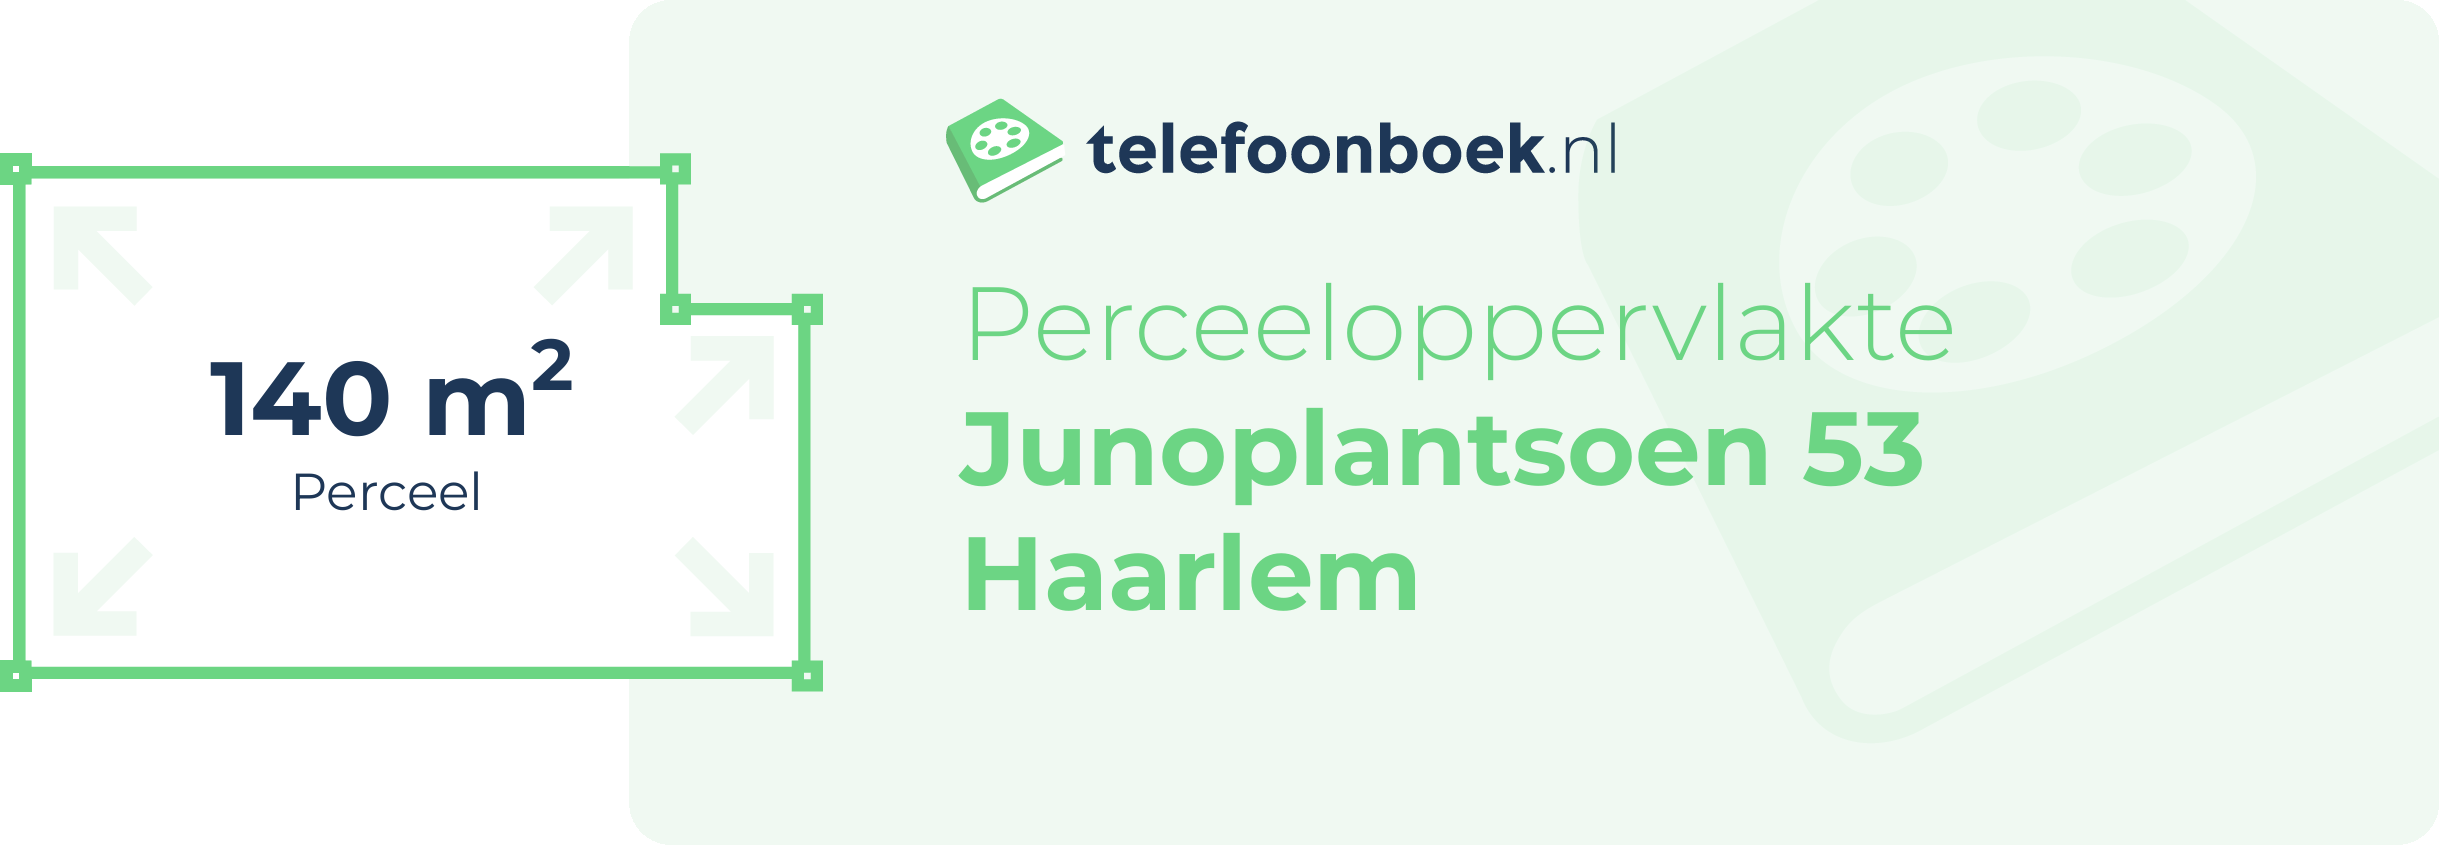 Perceeloppervlakte Junoplantsoen 53 Haarlem